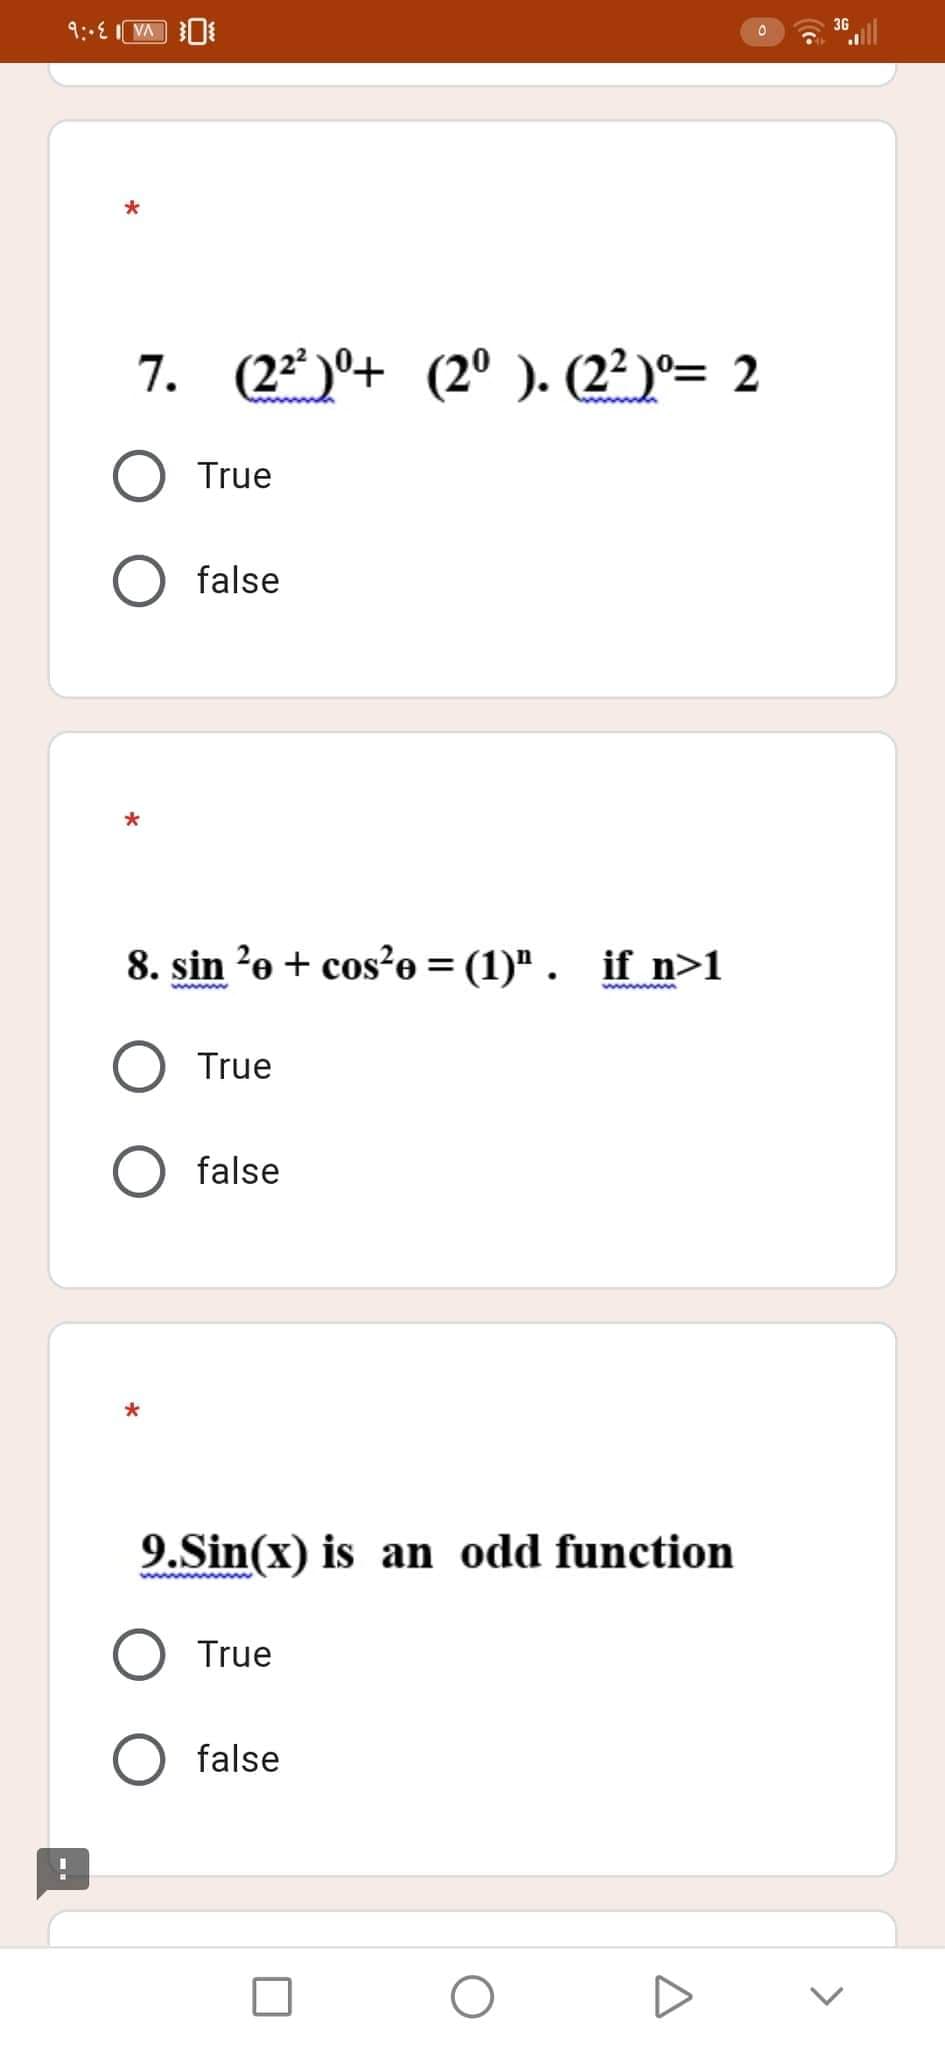 9:-E
VA
0
*
7. (2²²) ⁰+ (2⁰). (2²)⁰= 2
True
false
*
8. sin ²e + cos²e = (1)". if n>1
wwwm
True
O false
*
9.Sin(x) is an odd function
O True
false
O
36
<